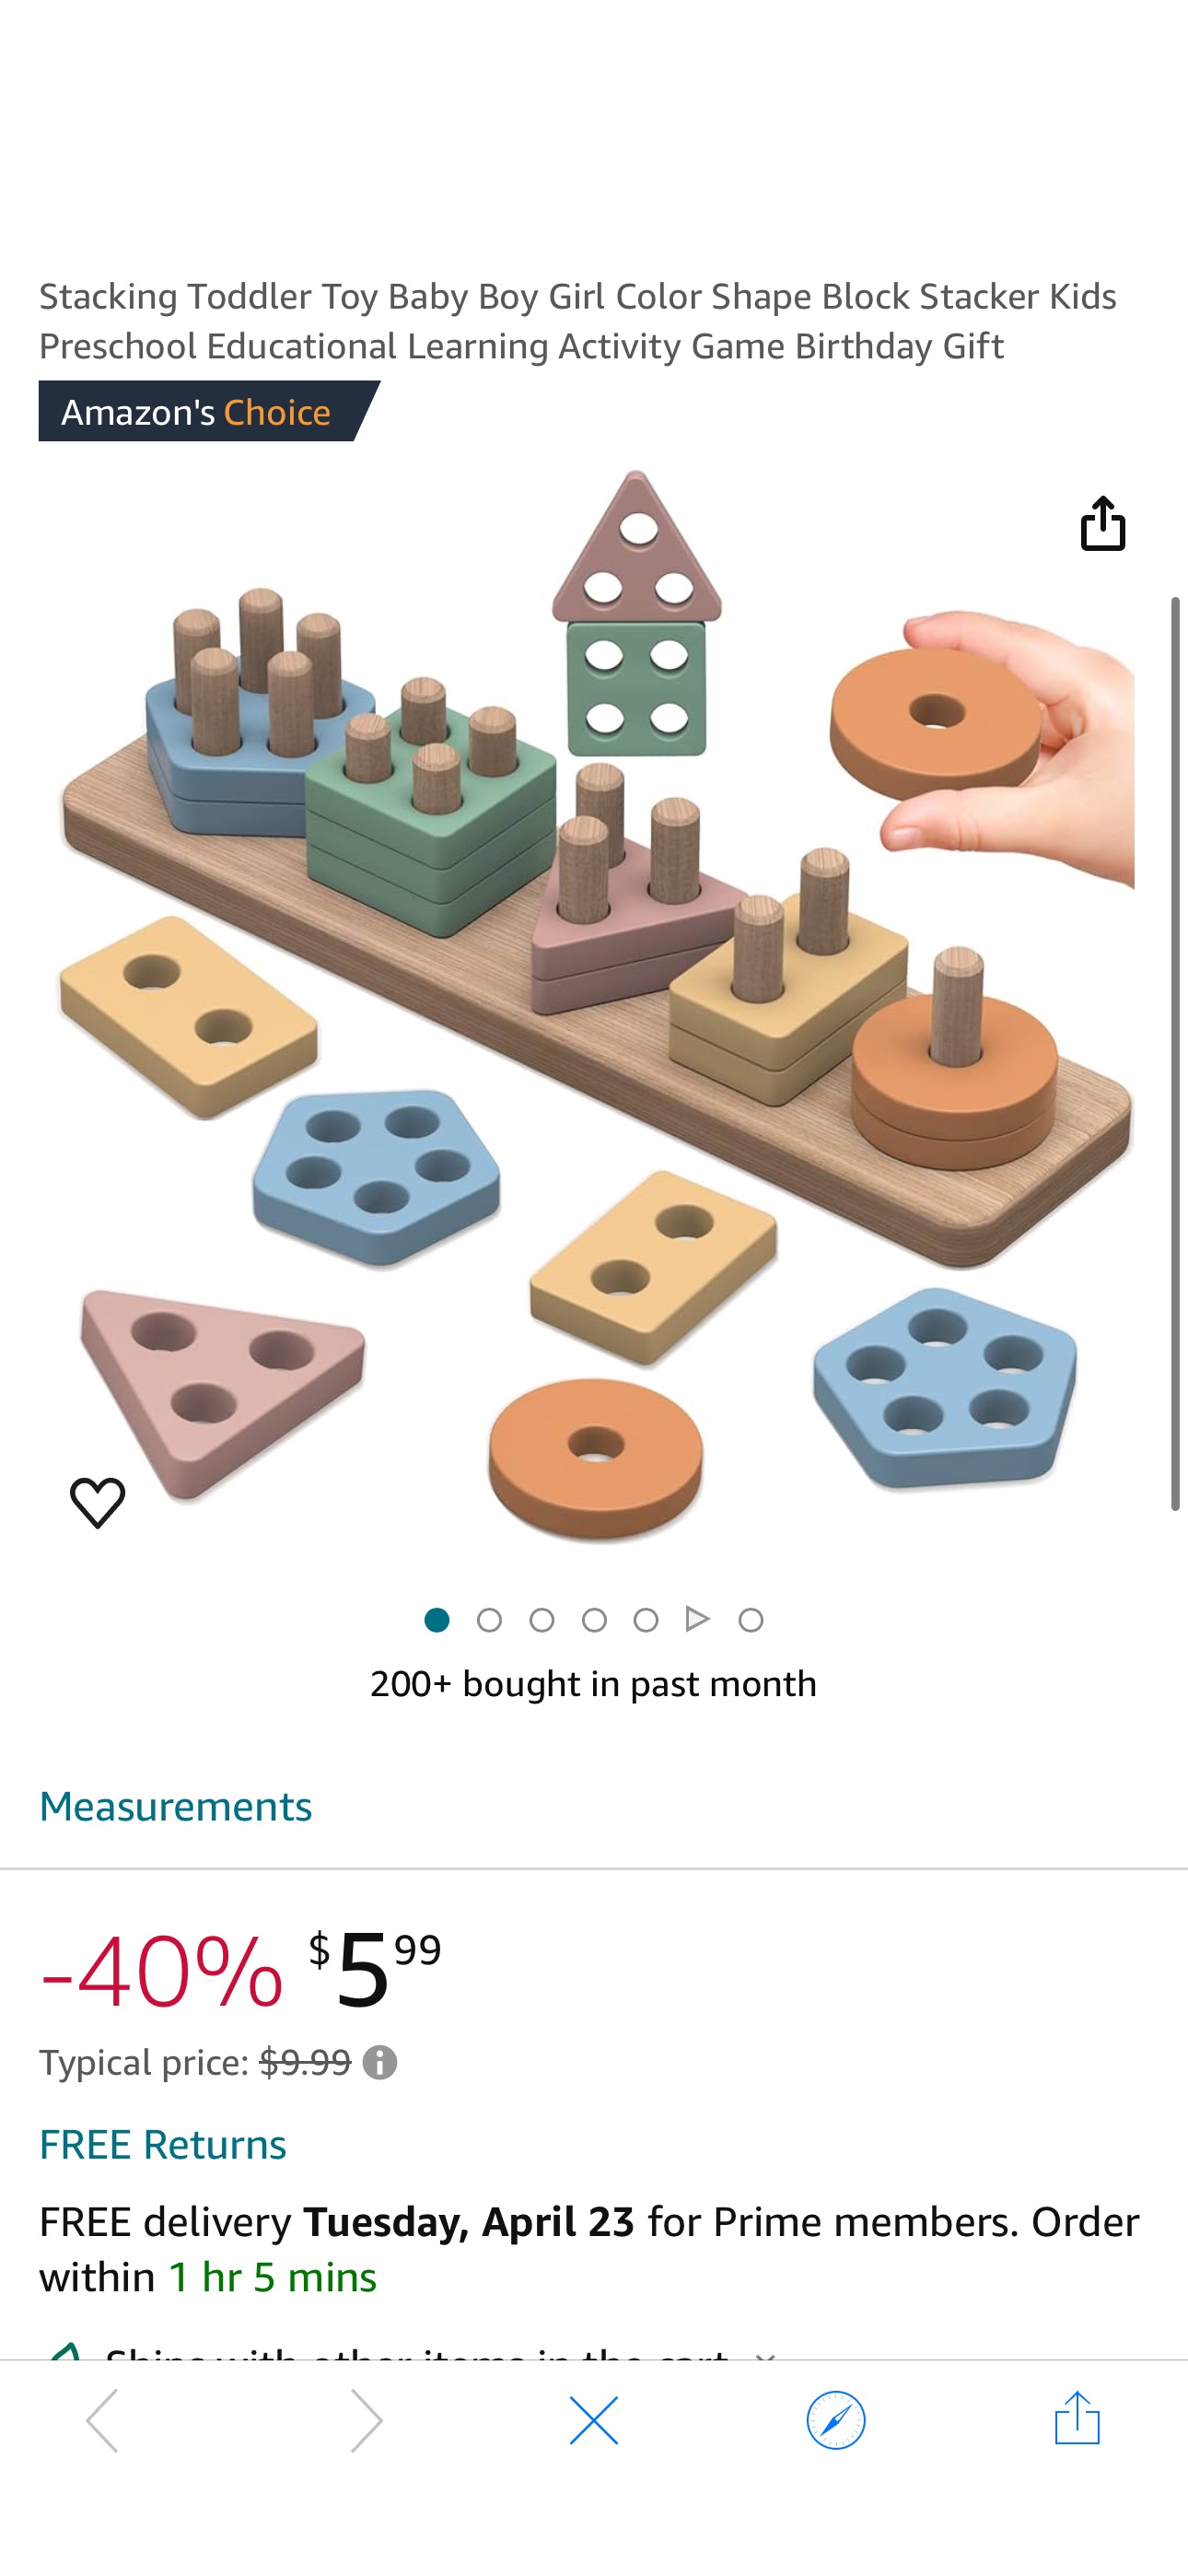 Amazon.com: pigipigi Montessori Toys for 1 2 3 4 Years Old: Wooden Sorting Stacking $2.99 Wooden Sorting Stacking Toddler Toy
Use Code 50YURDC2